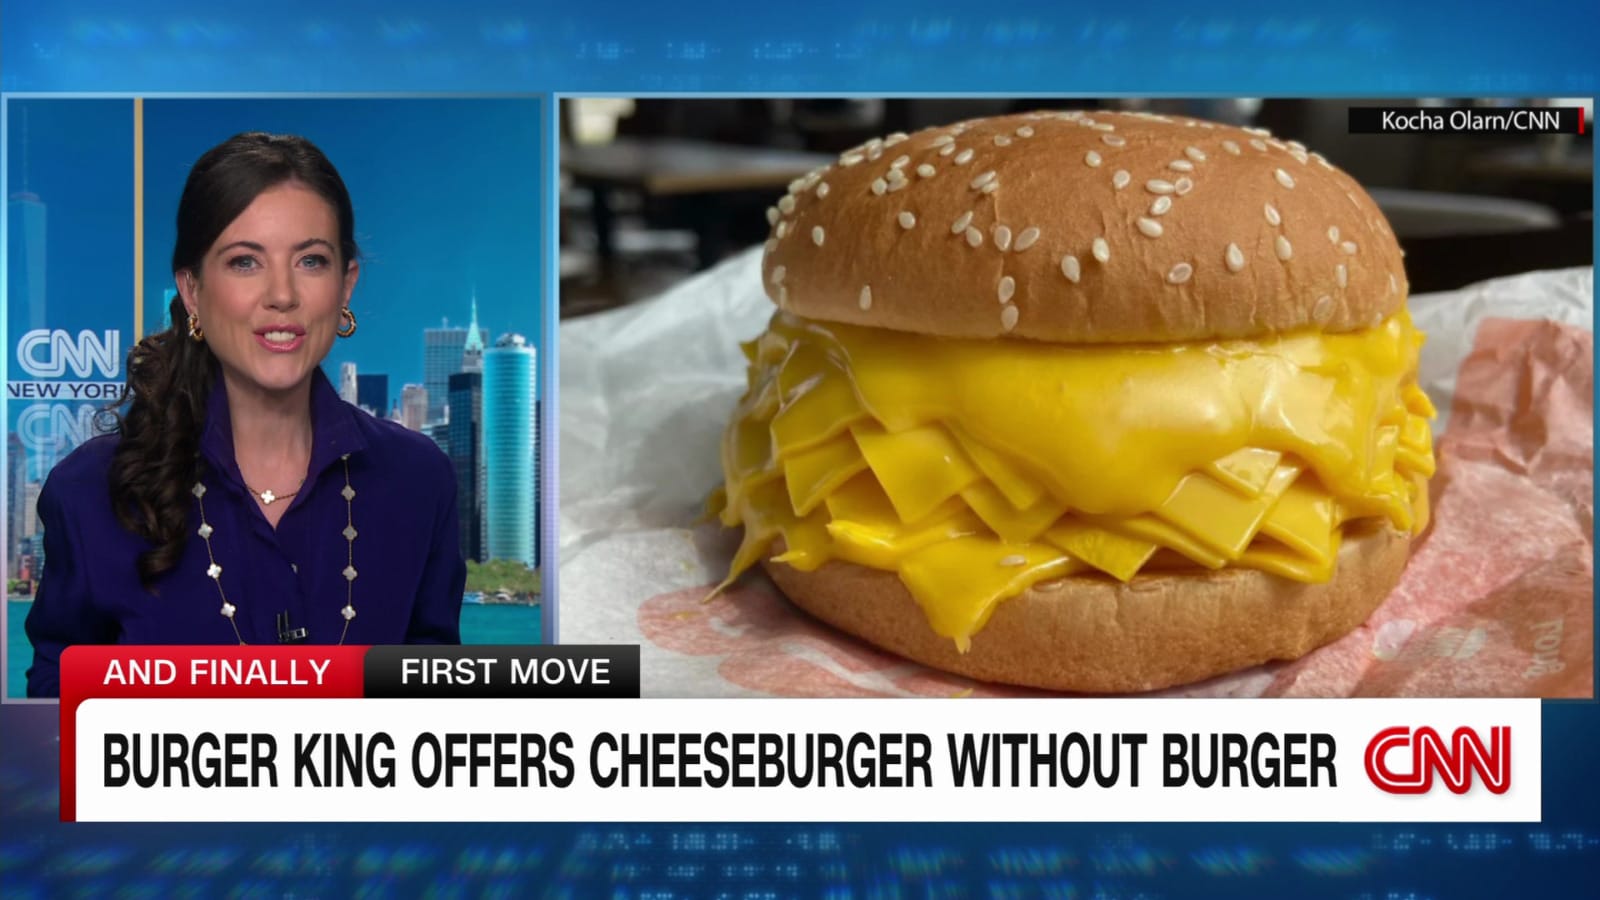 real cheeseburger เบอร์เกอร์ชีสล้วน burger king ดังระดับโลก